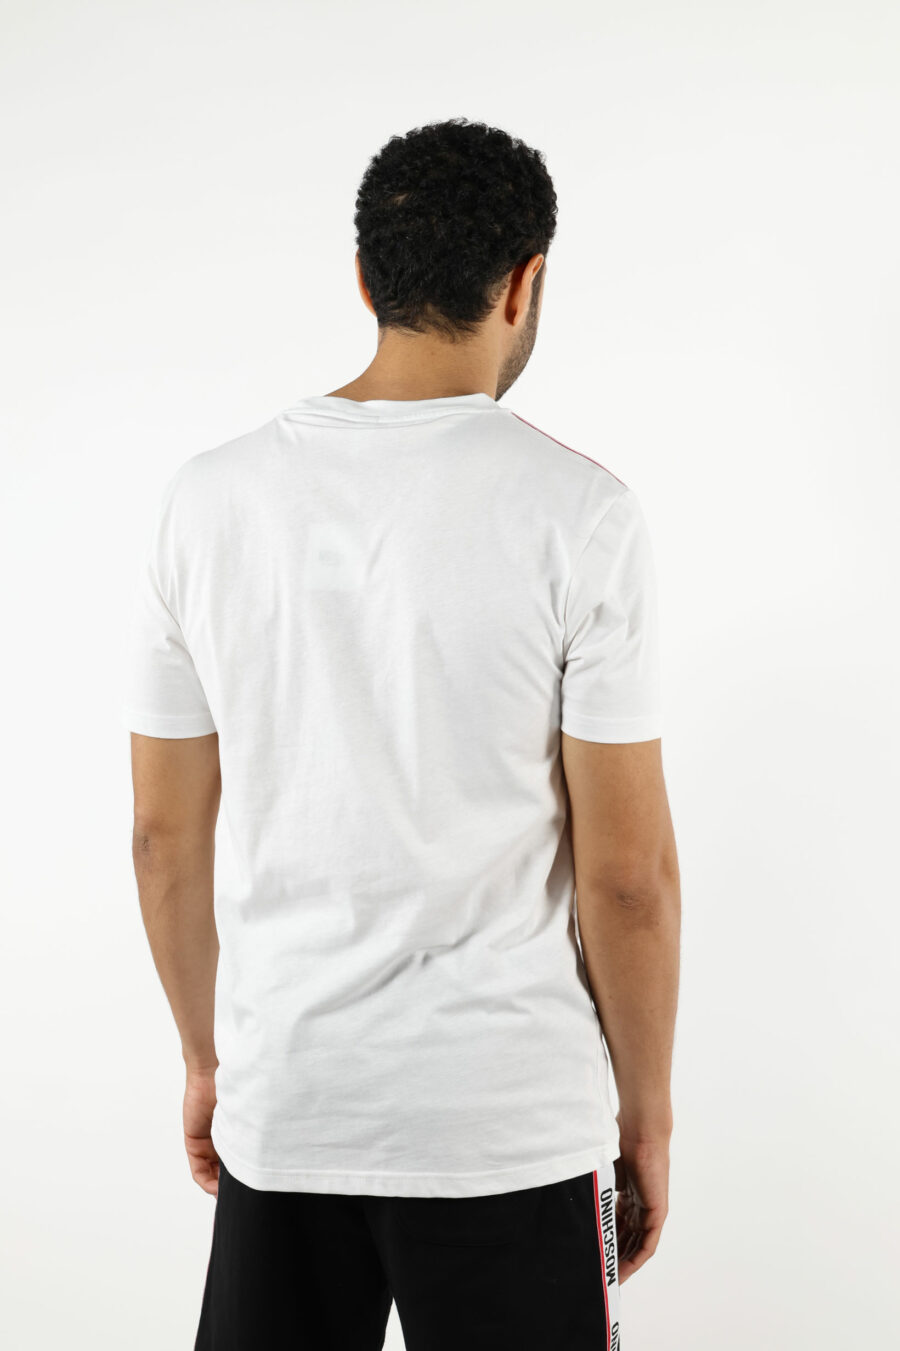 Camiseta blanca con logo negro con detalle rojo en cinta en hombros - 110991